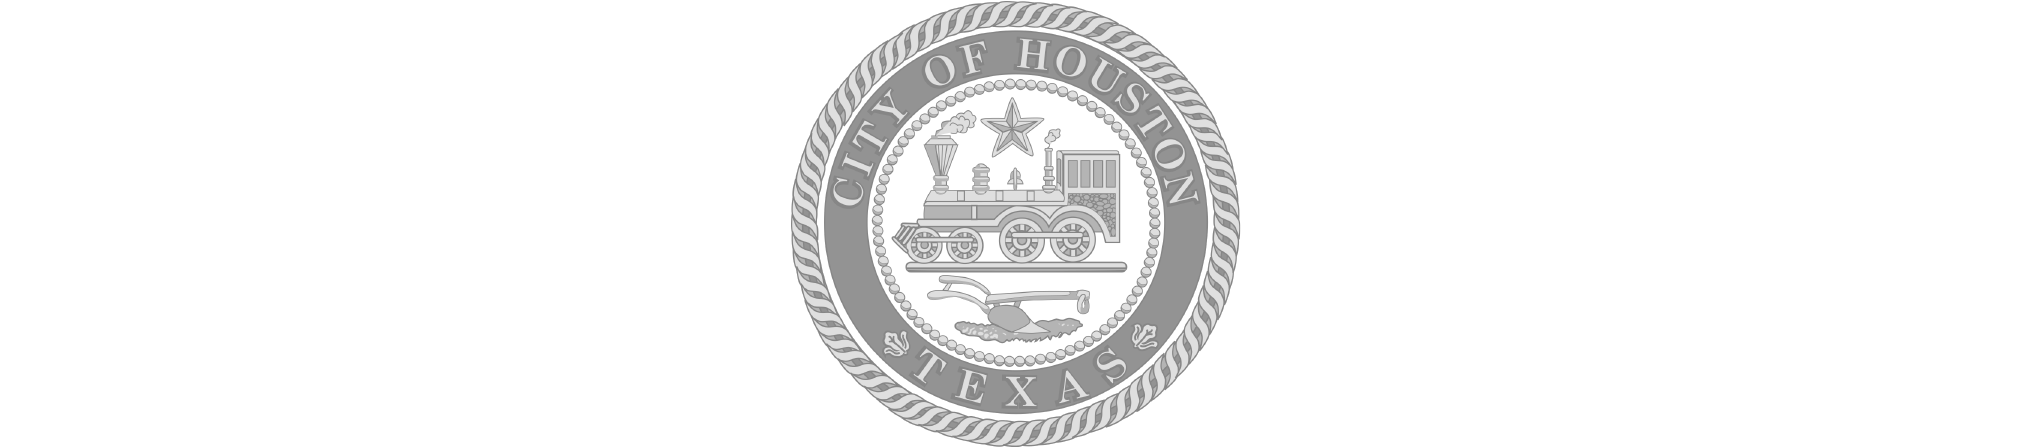 City of Houston logo in grey.